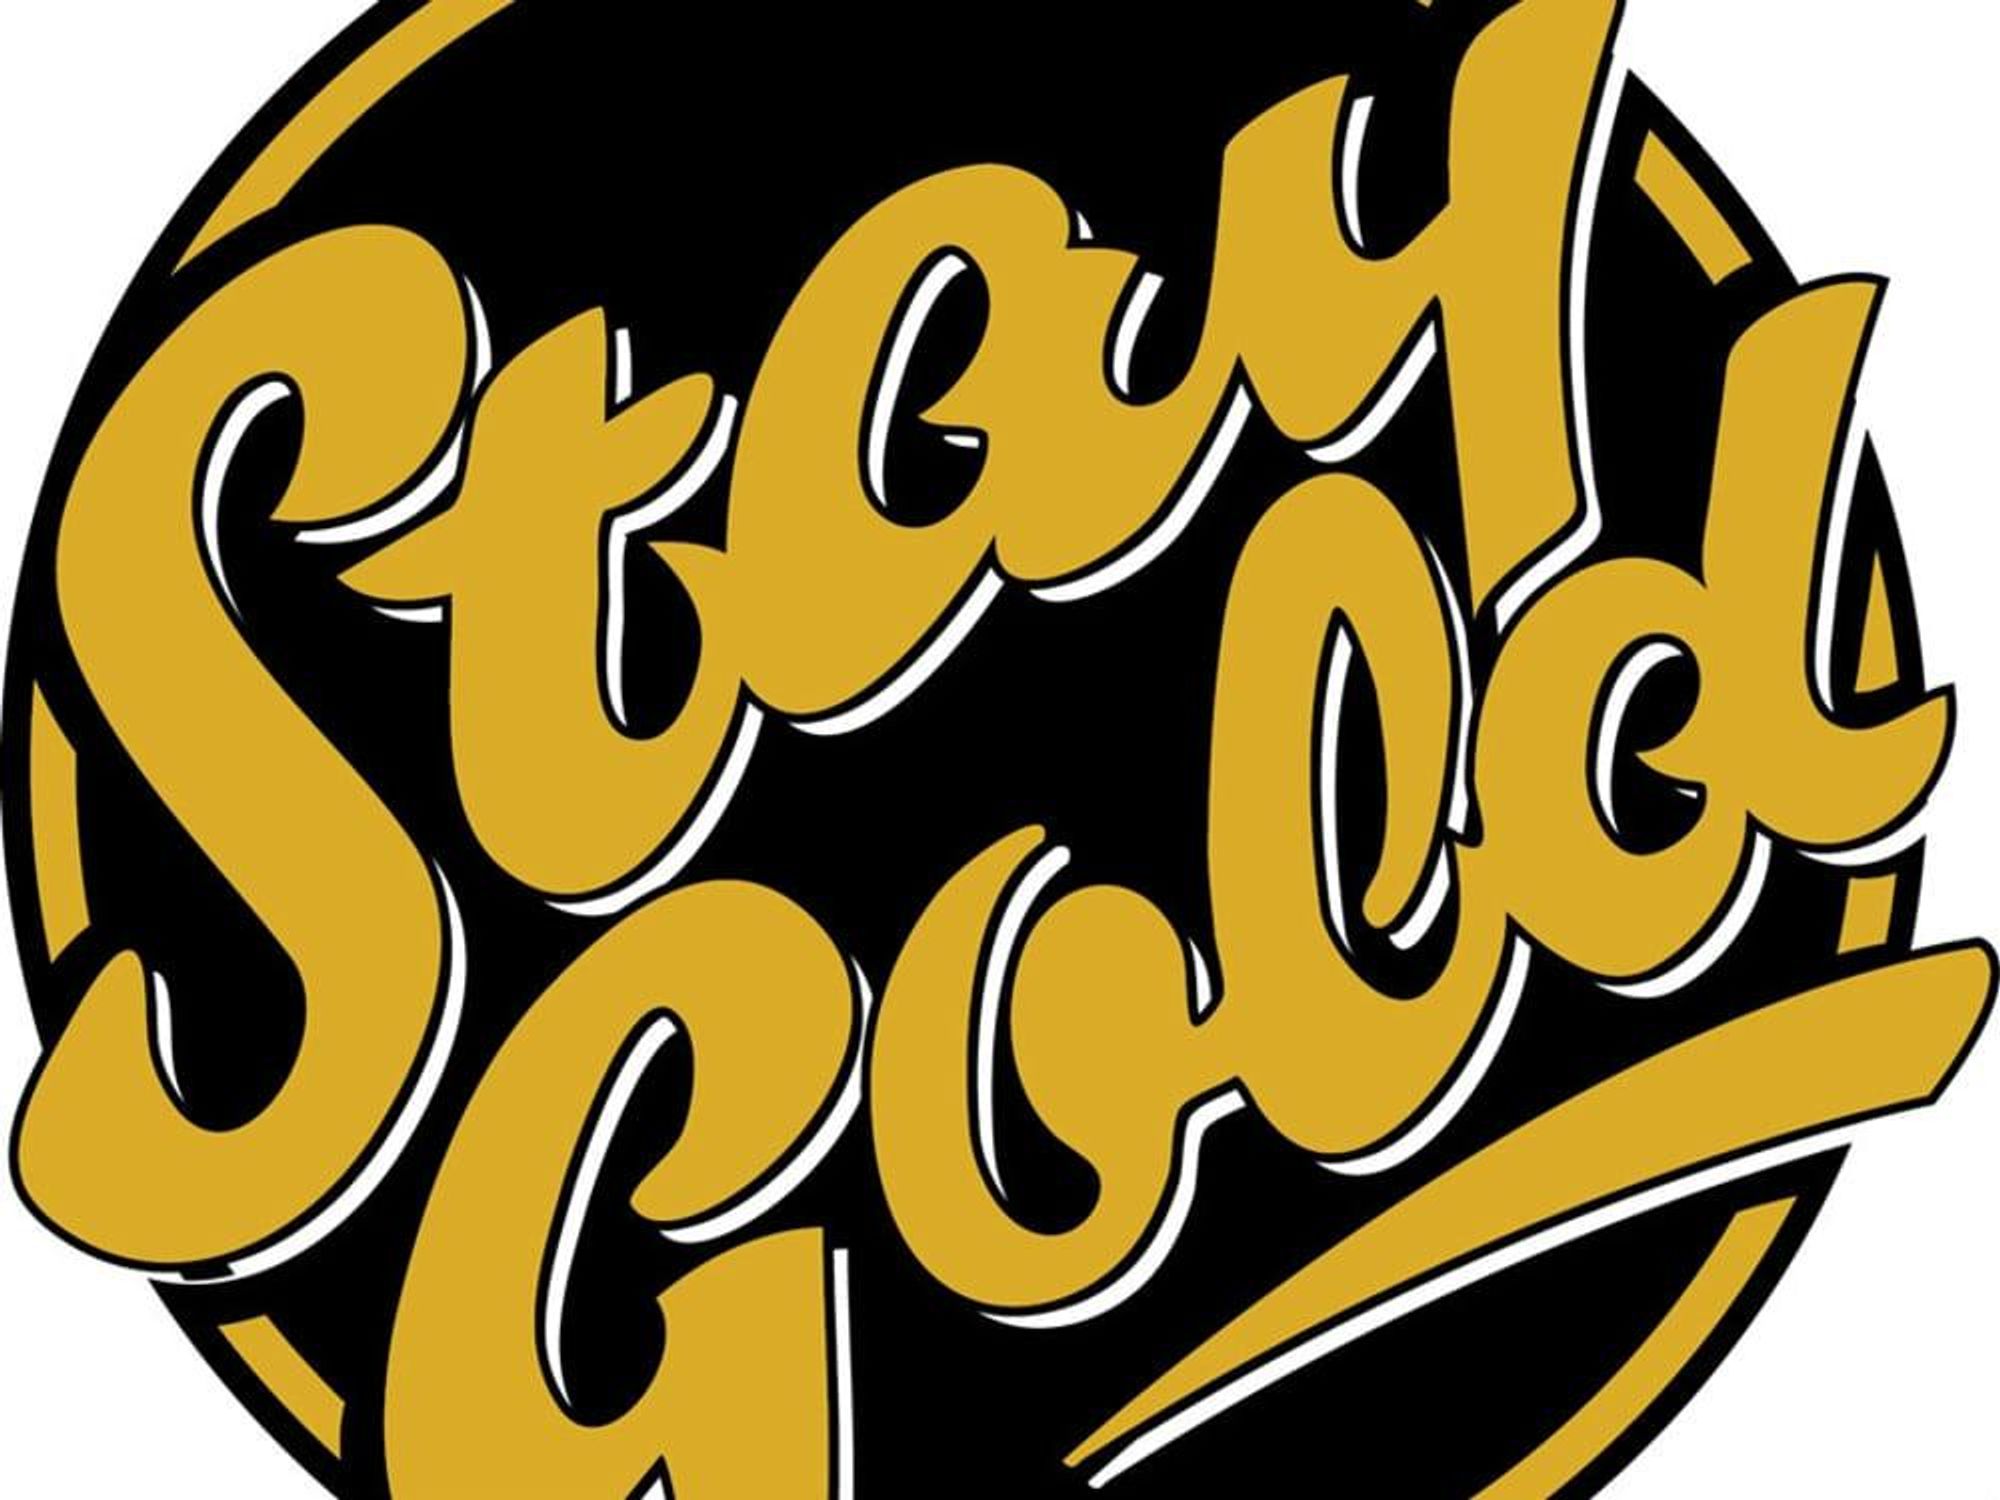 Stay Gold logo